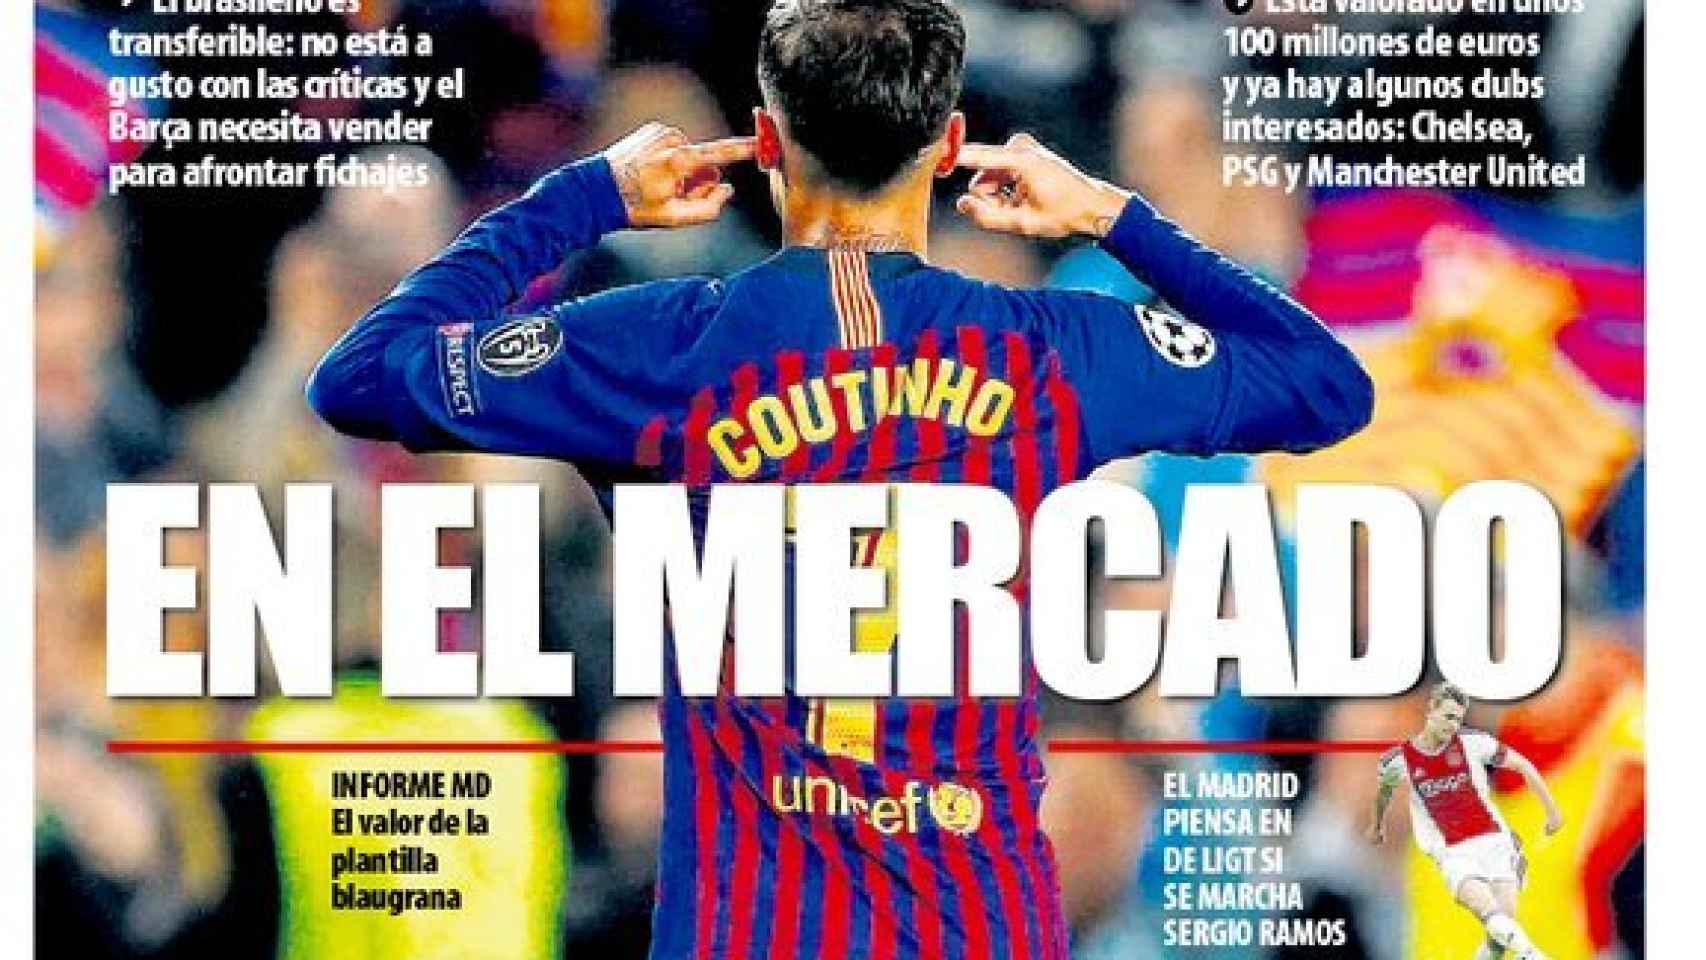 La portada del diario Mundo Deportivo (30/05/2019)1706 x 960